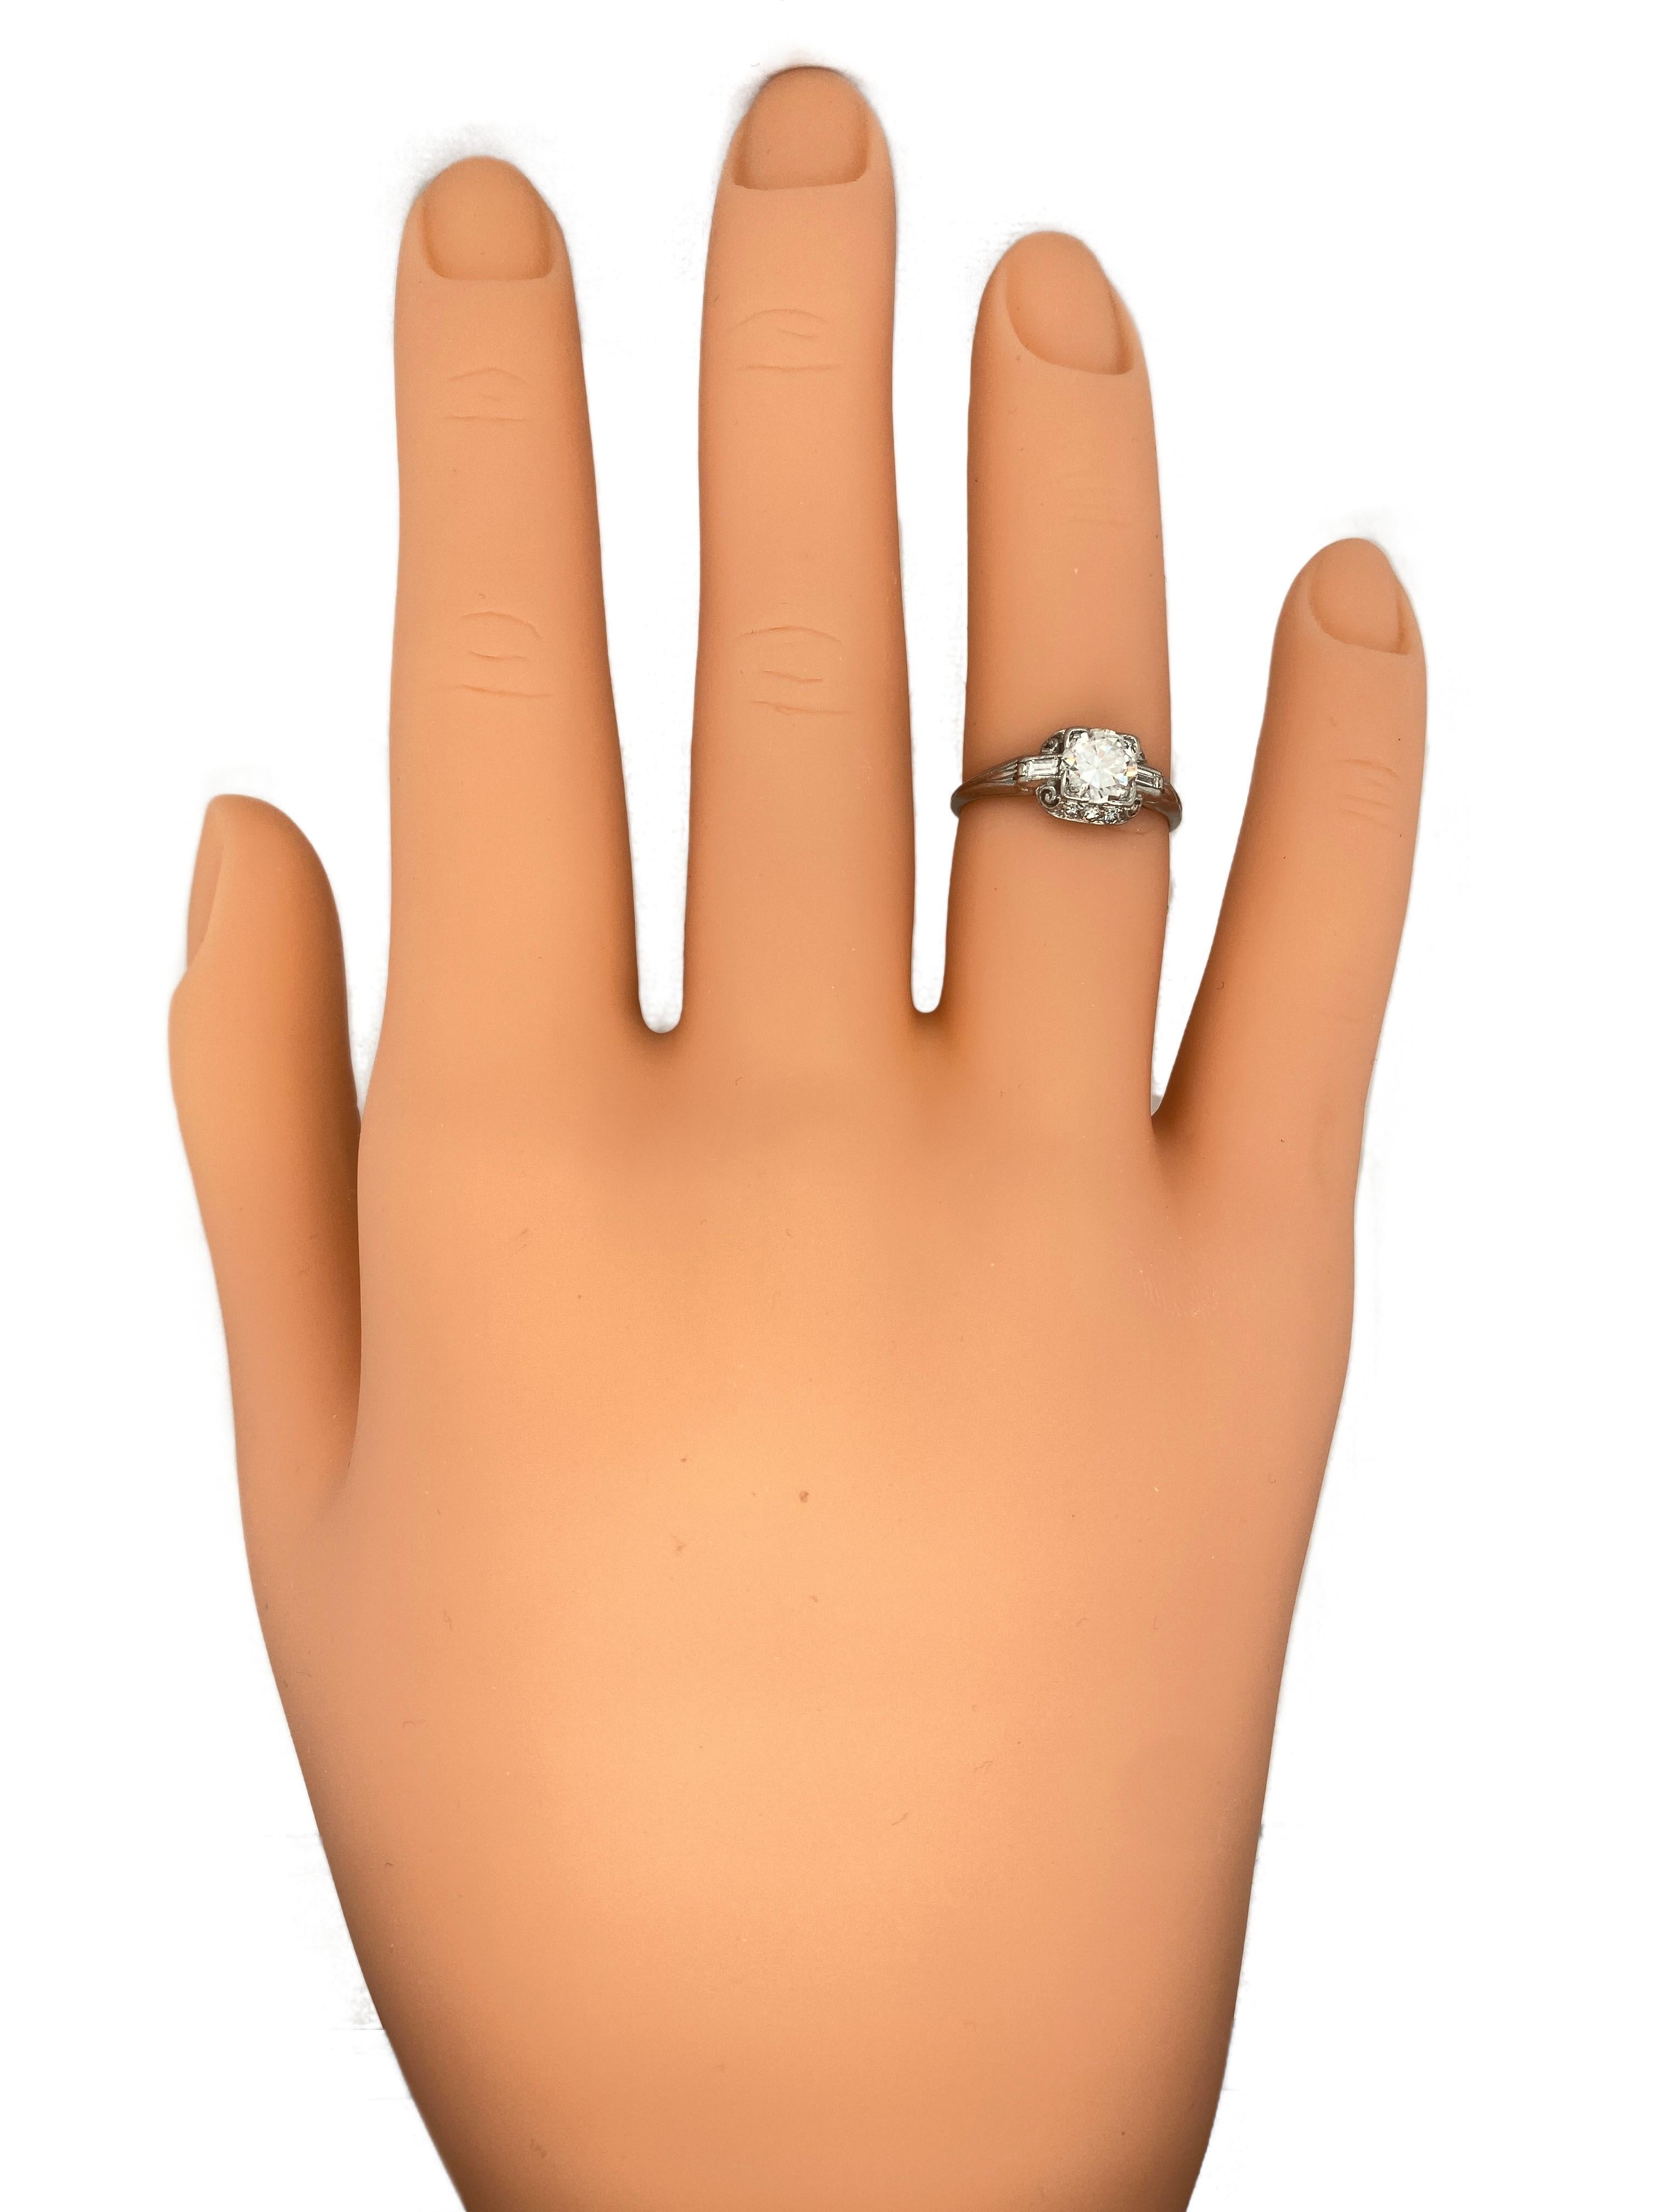 Goldsmith Bros. 1932 0.80 Carat Diamond Engagement Ring in Platinum For Sale 1